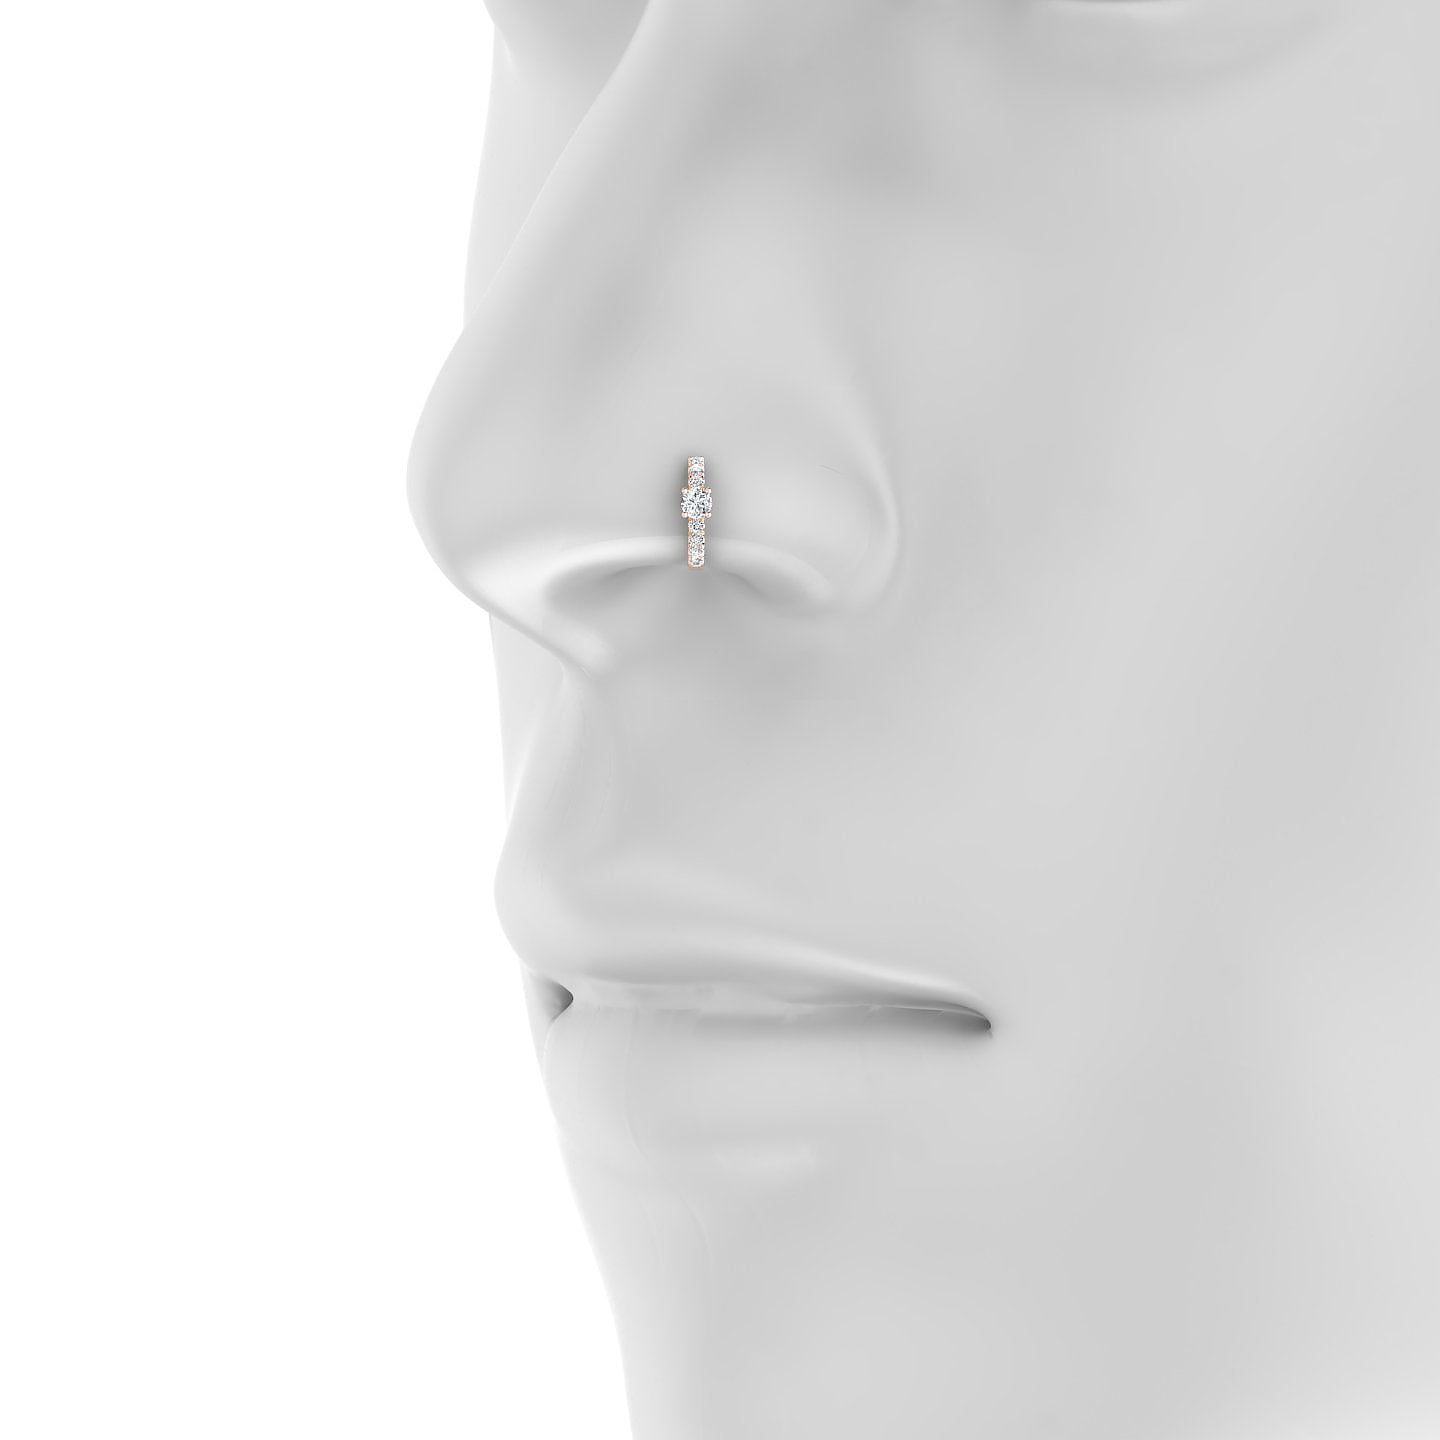 Inanna | 18k Rose Gold 6.5 mm Round Diamond Nose Ring Piercing